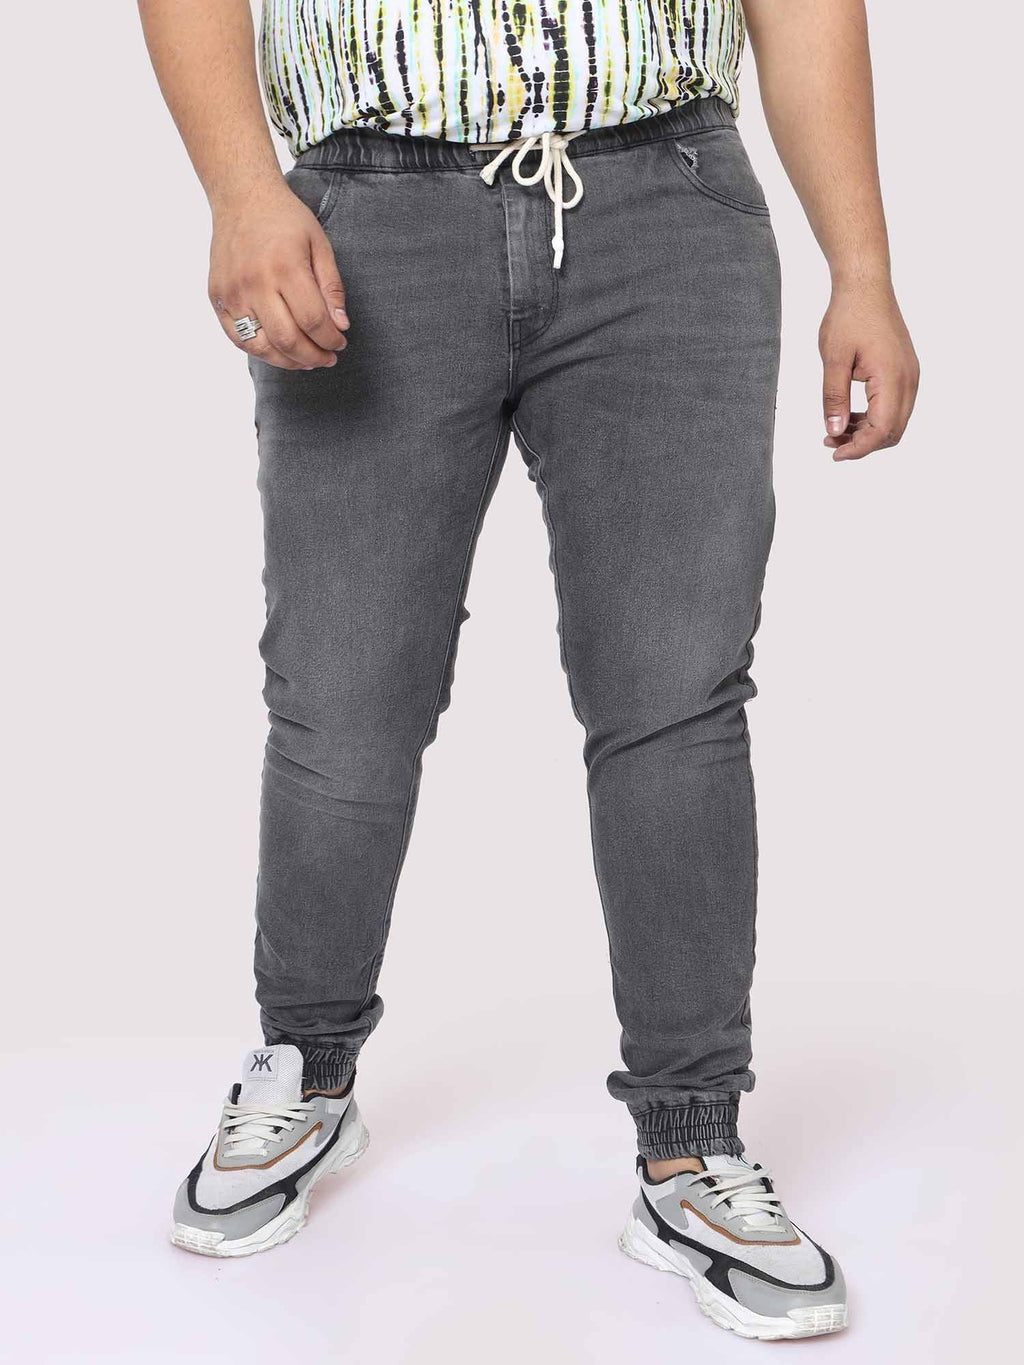 Logo Grey Melange Men Jogger Pant, Daily Wear at Rs 275/piece in